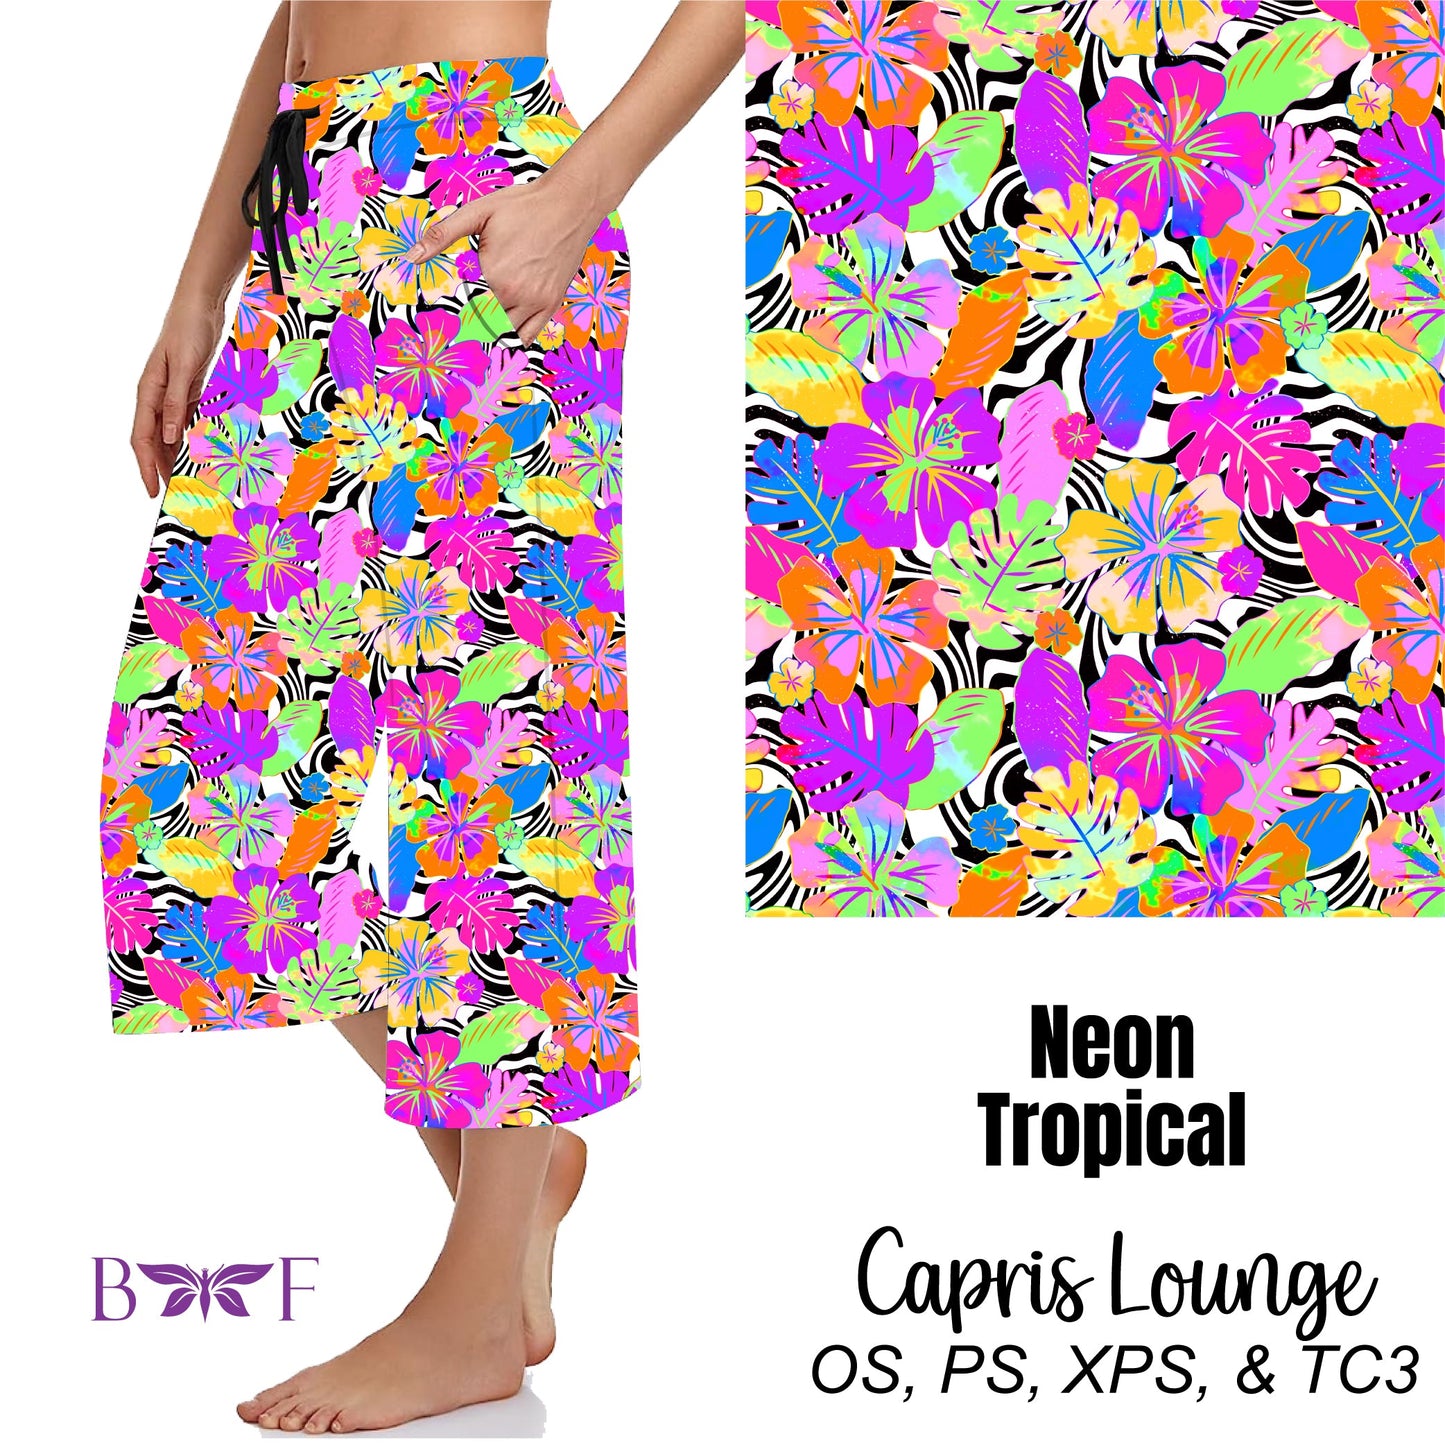 Neon Tropical Leggings, Capris and shorts